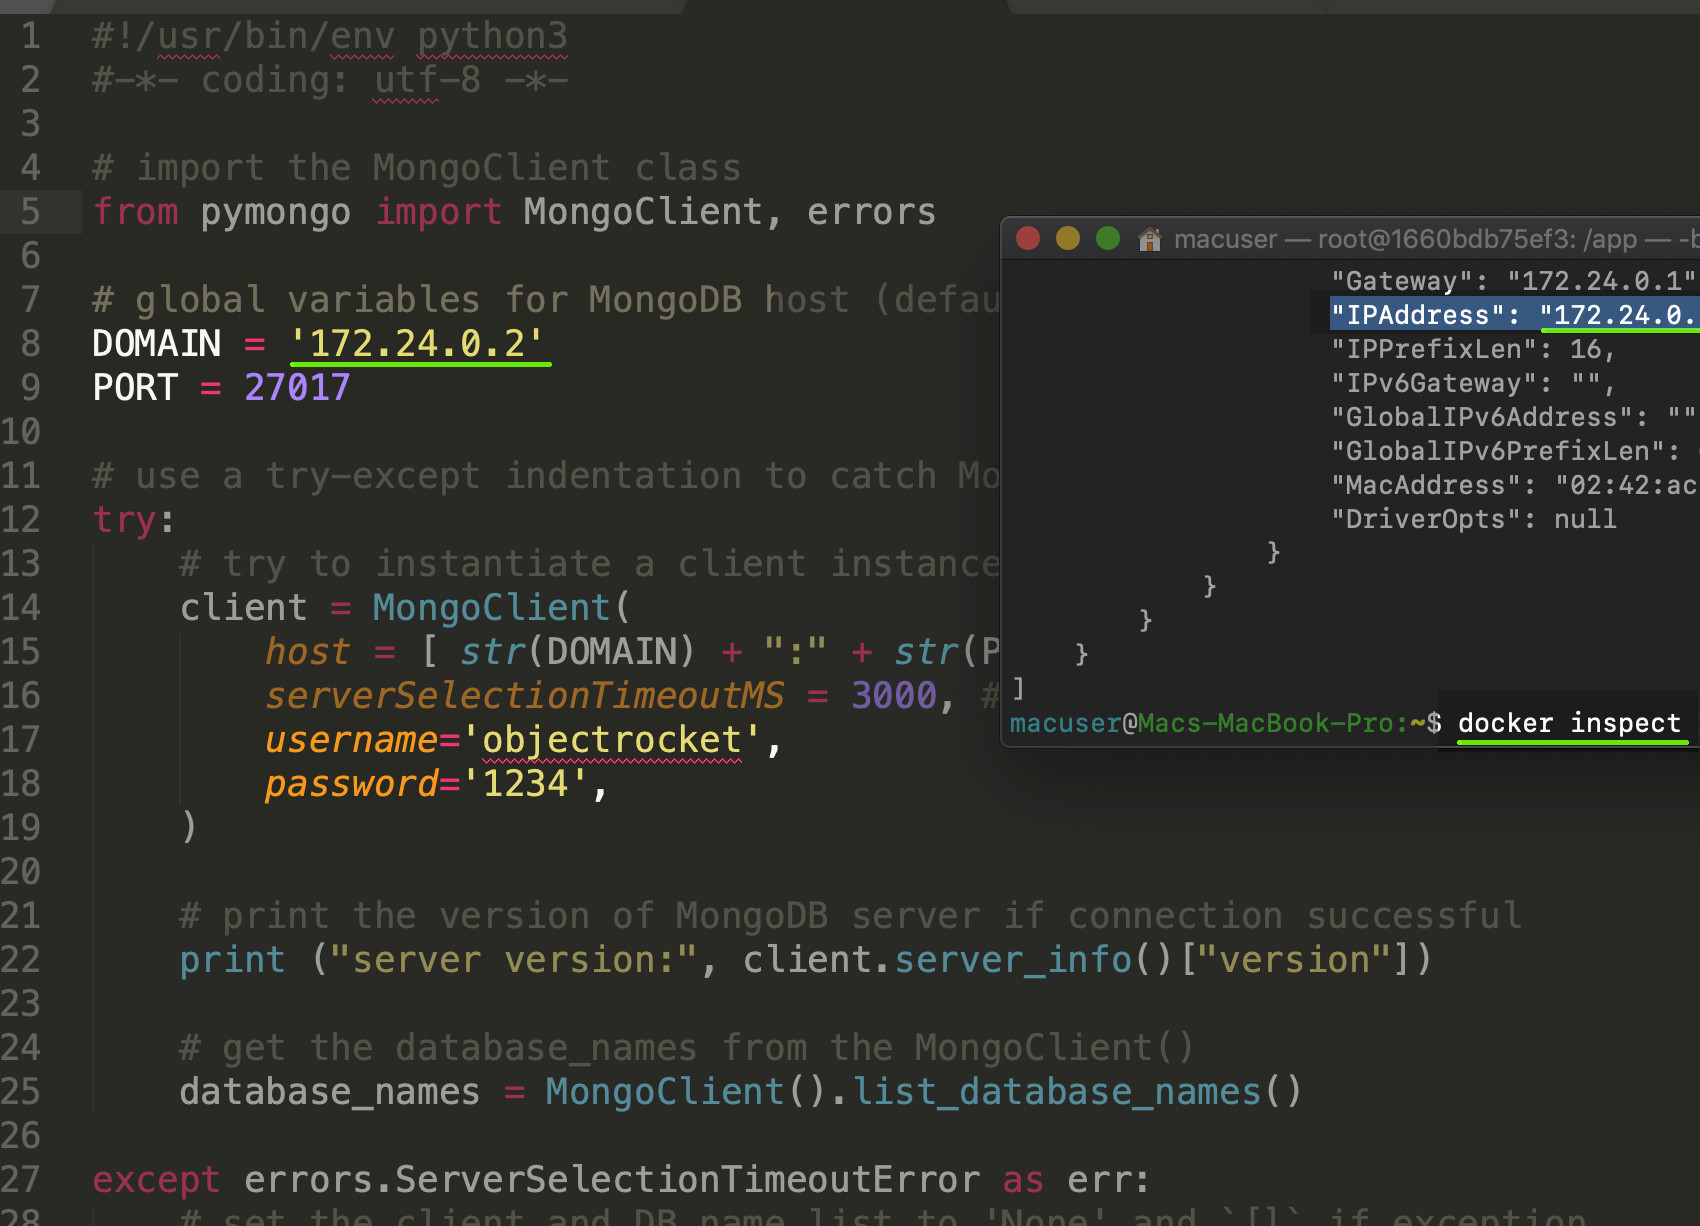 Screenshot of MongoDB Python script and Docker container IP address